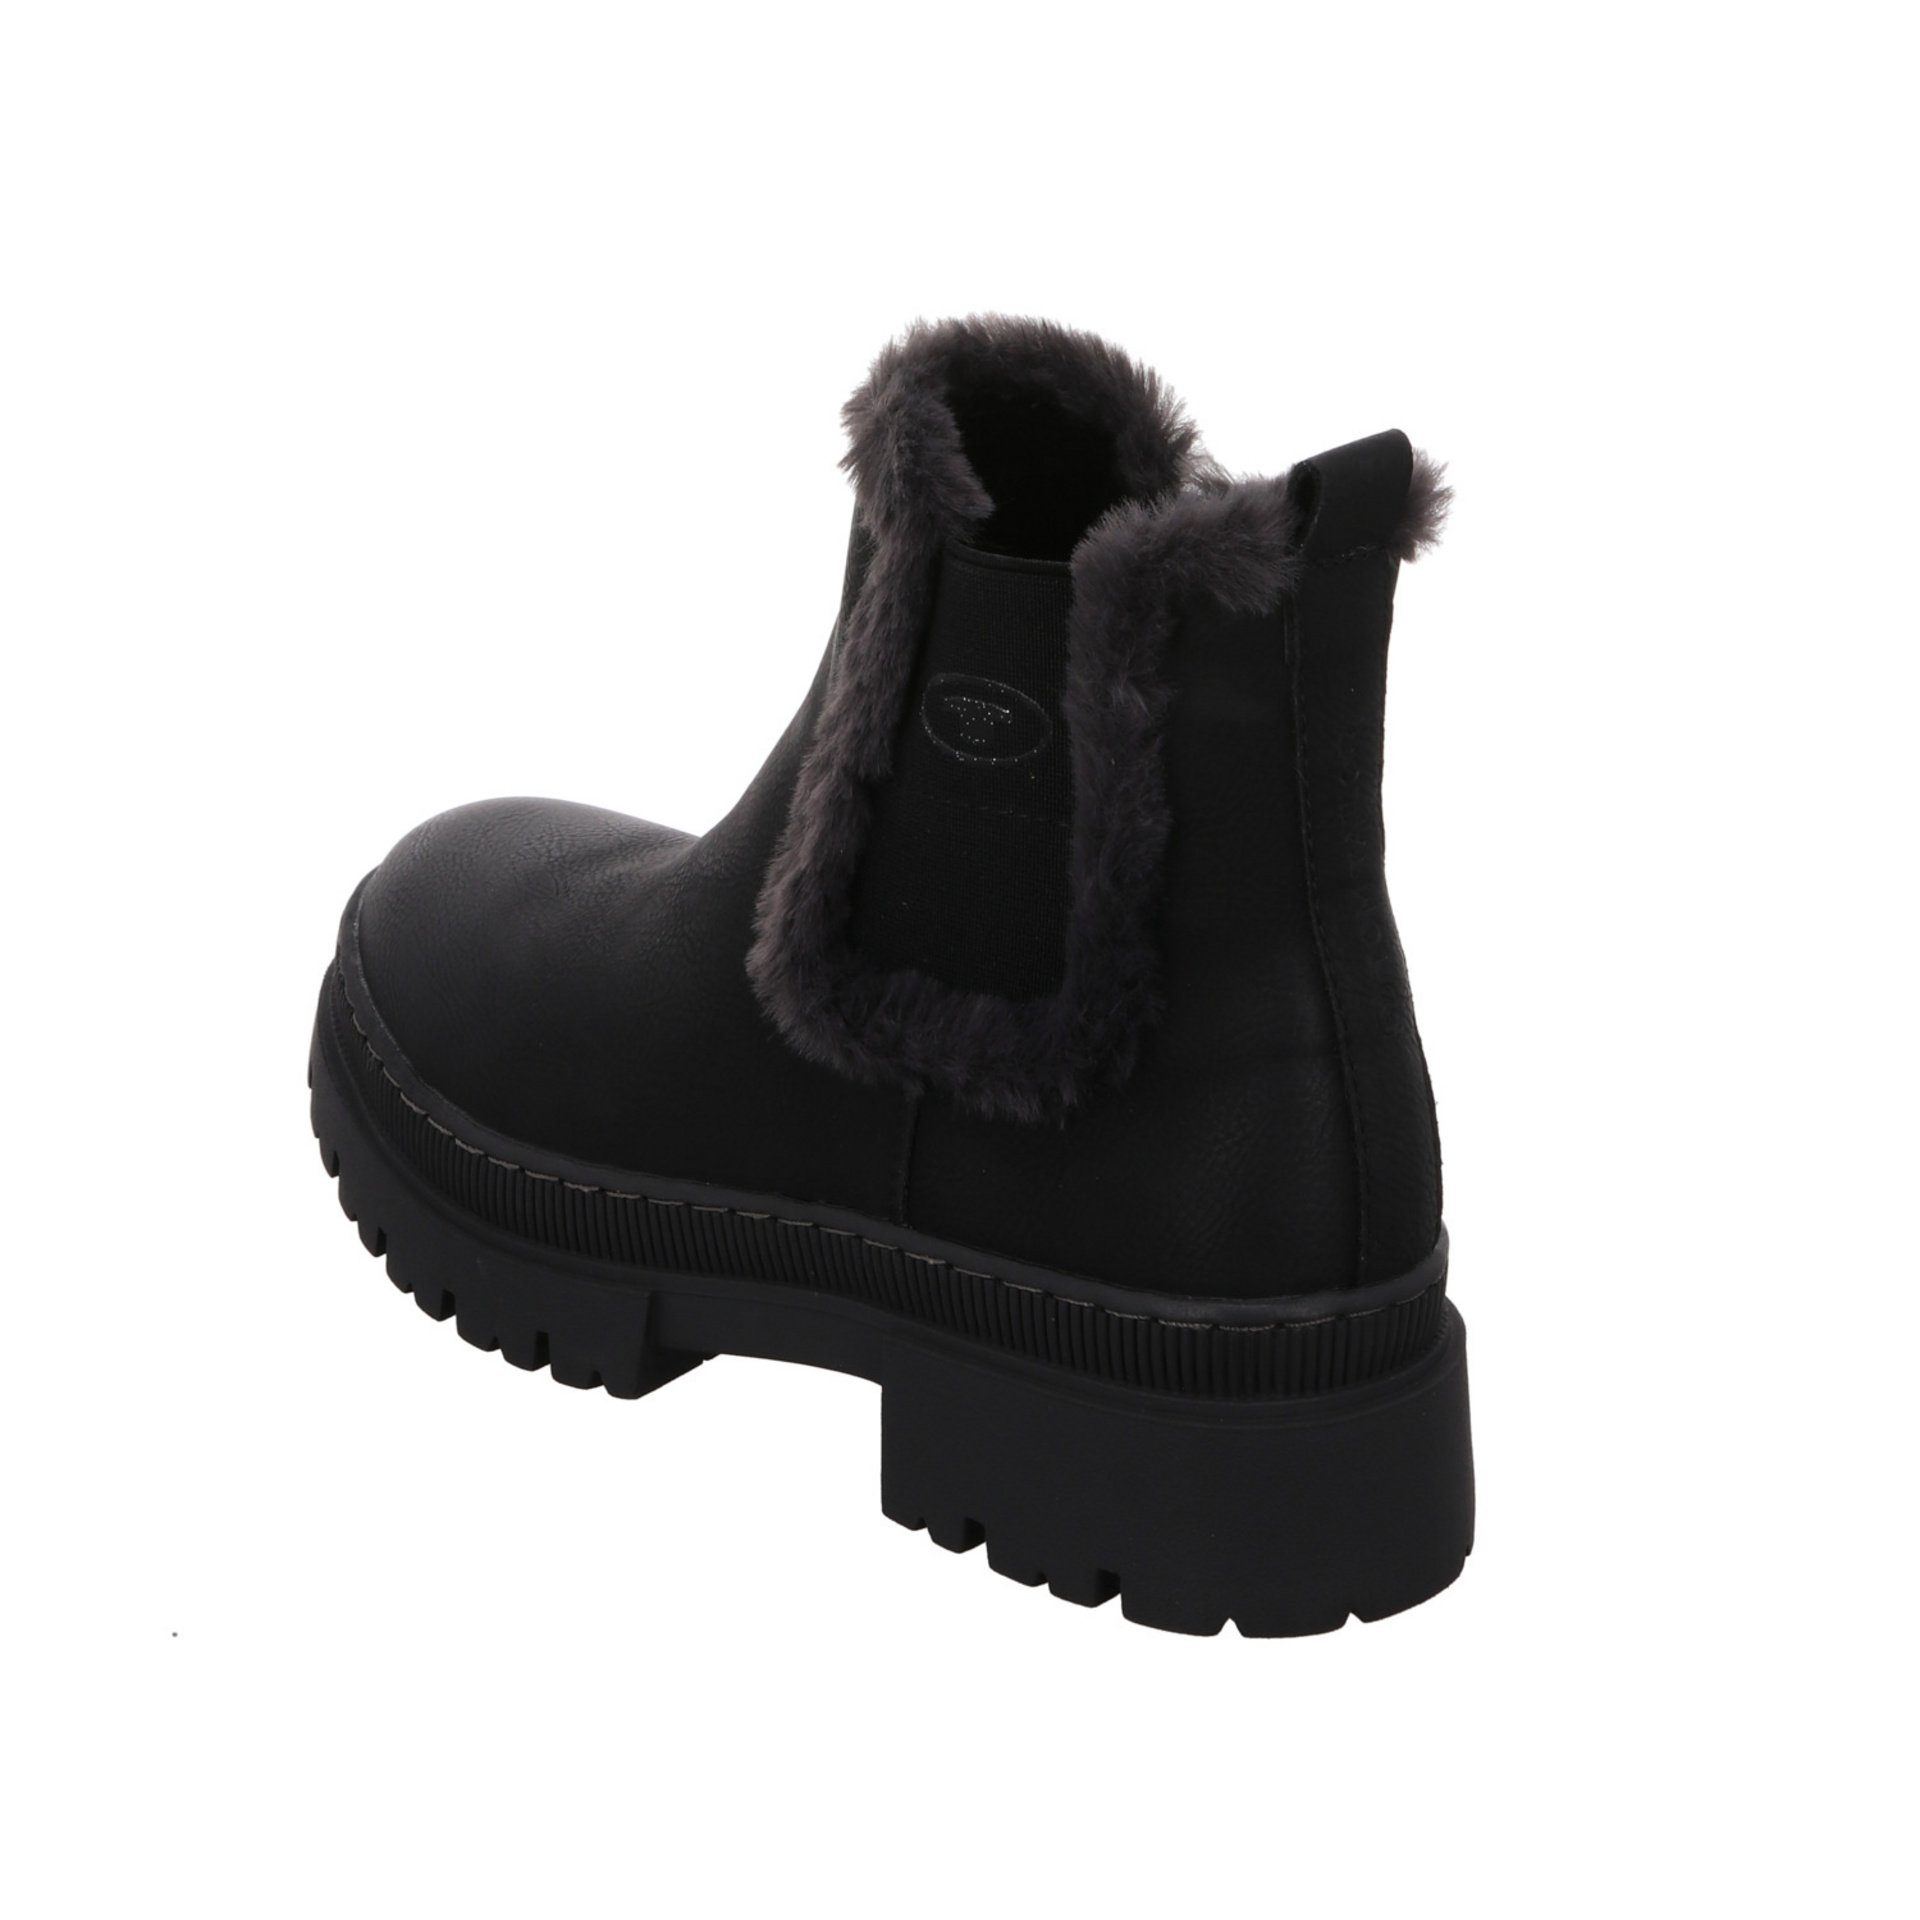 TAILOR Boots Stiefel black Chelsea Schuhe Synthetik Stiefel TOM Damen